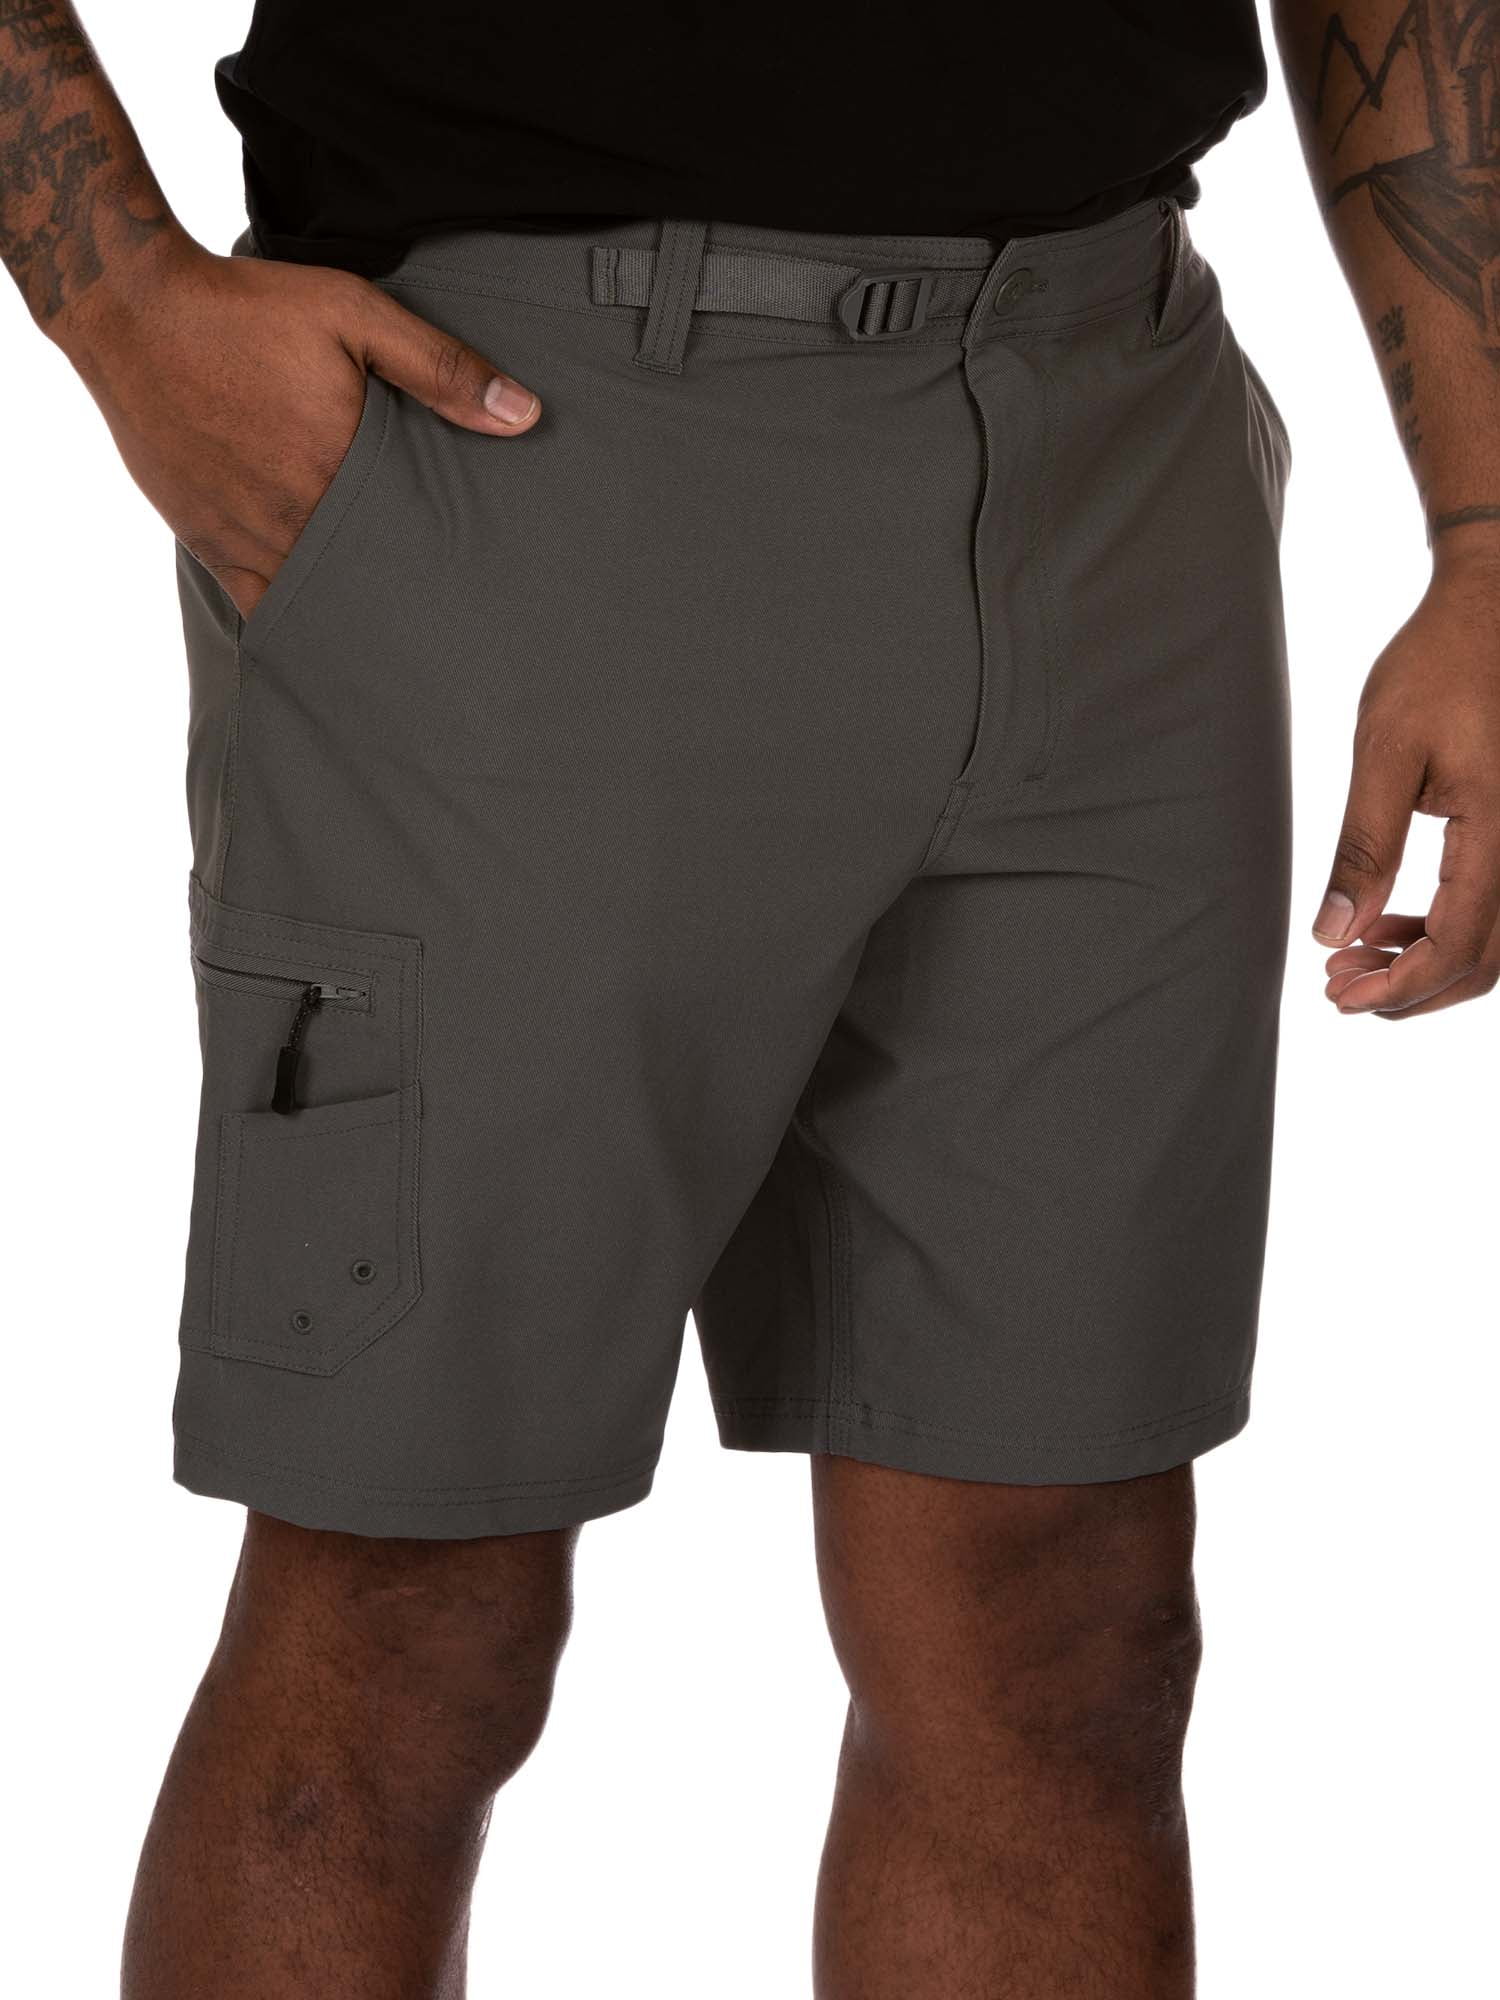 Realtree Men's Performance Hybrid Fishing Shorts - Walmart.com